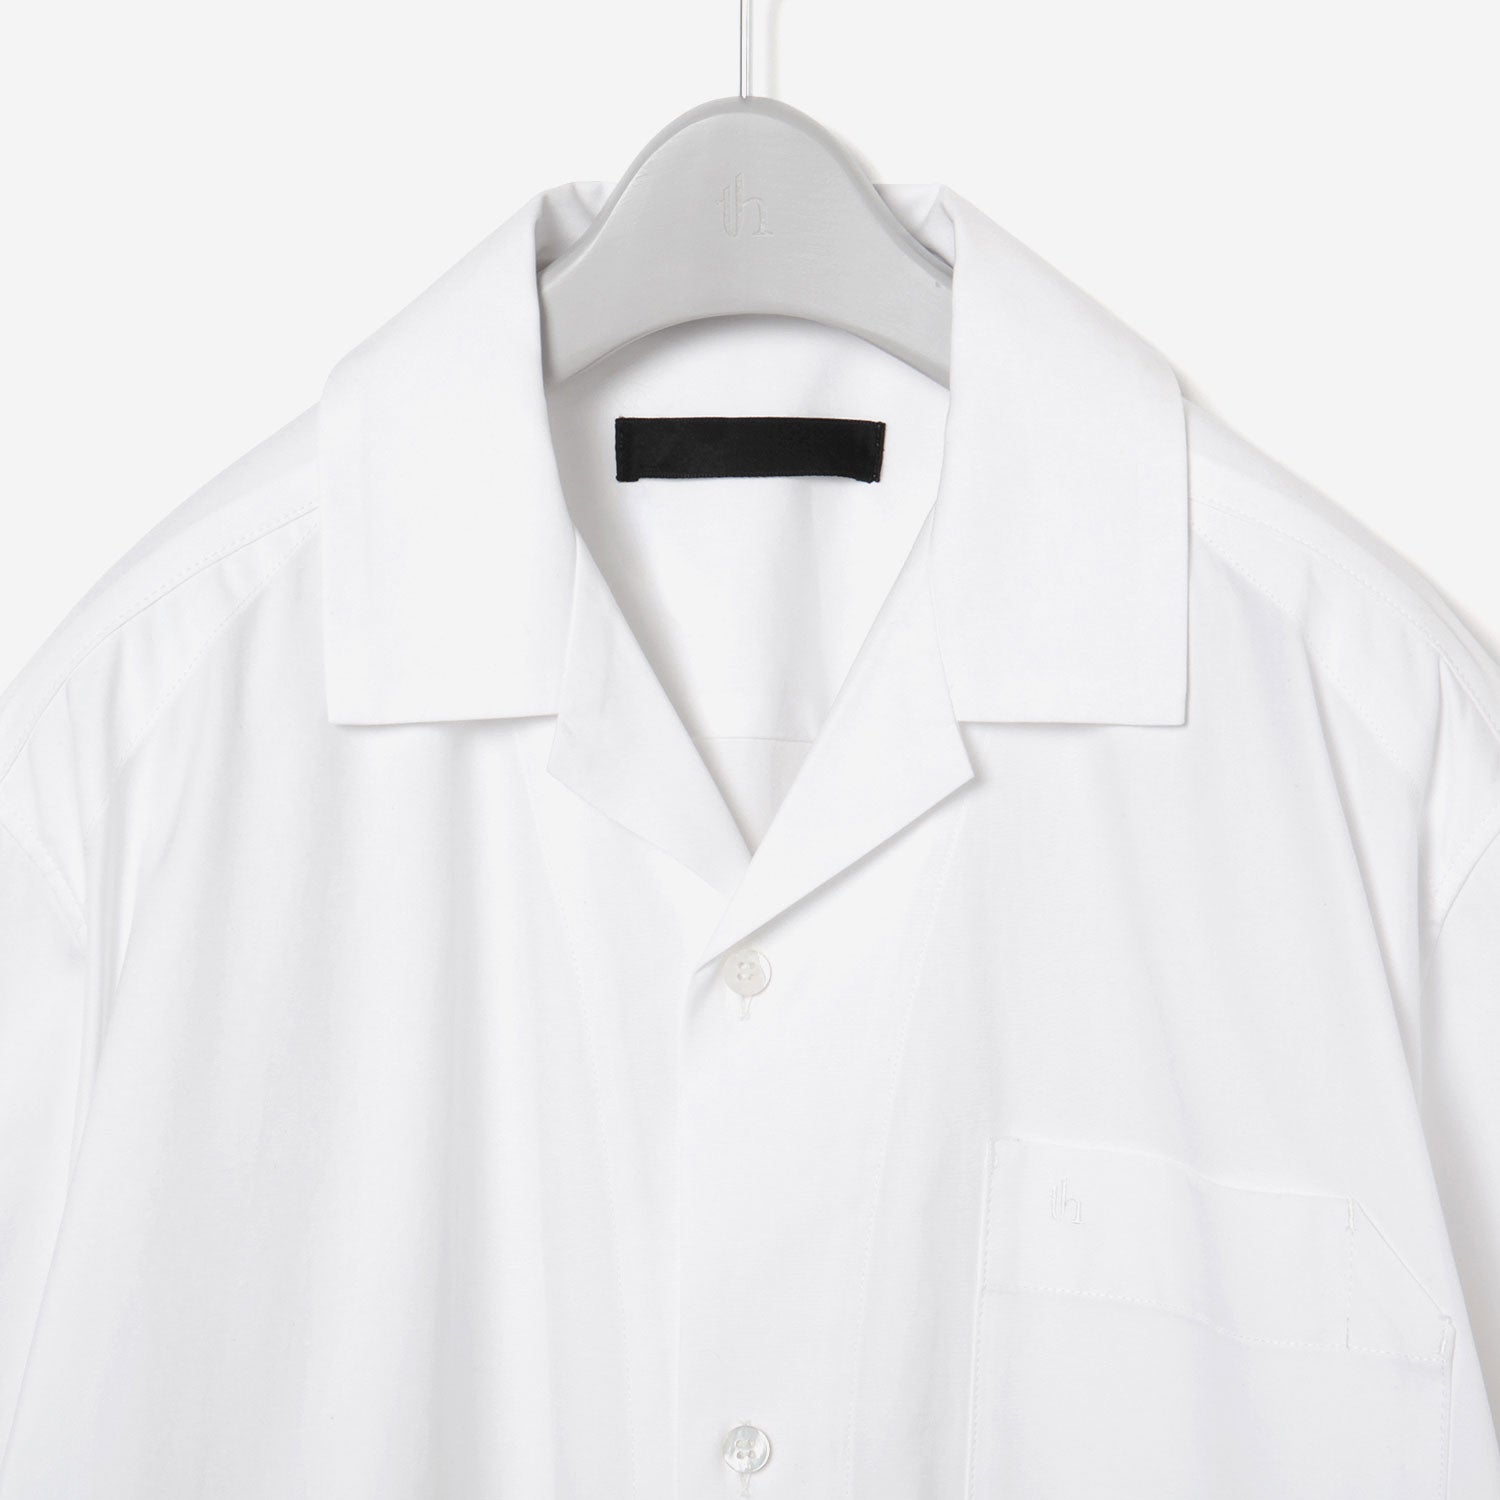 Long Shirt Coat / white